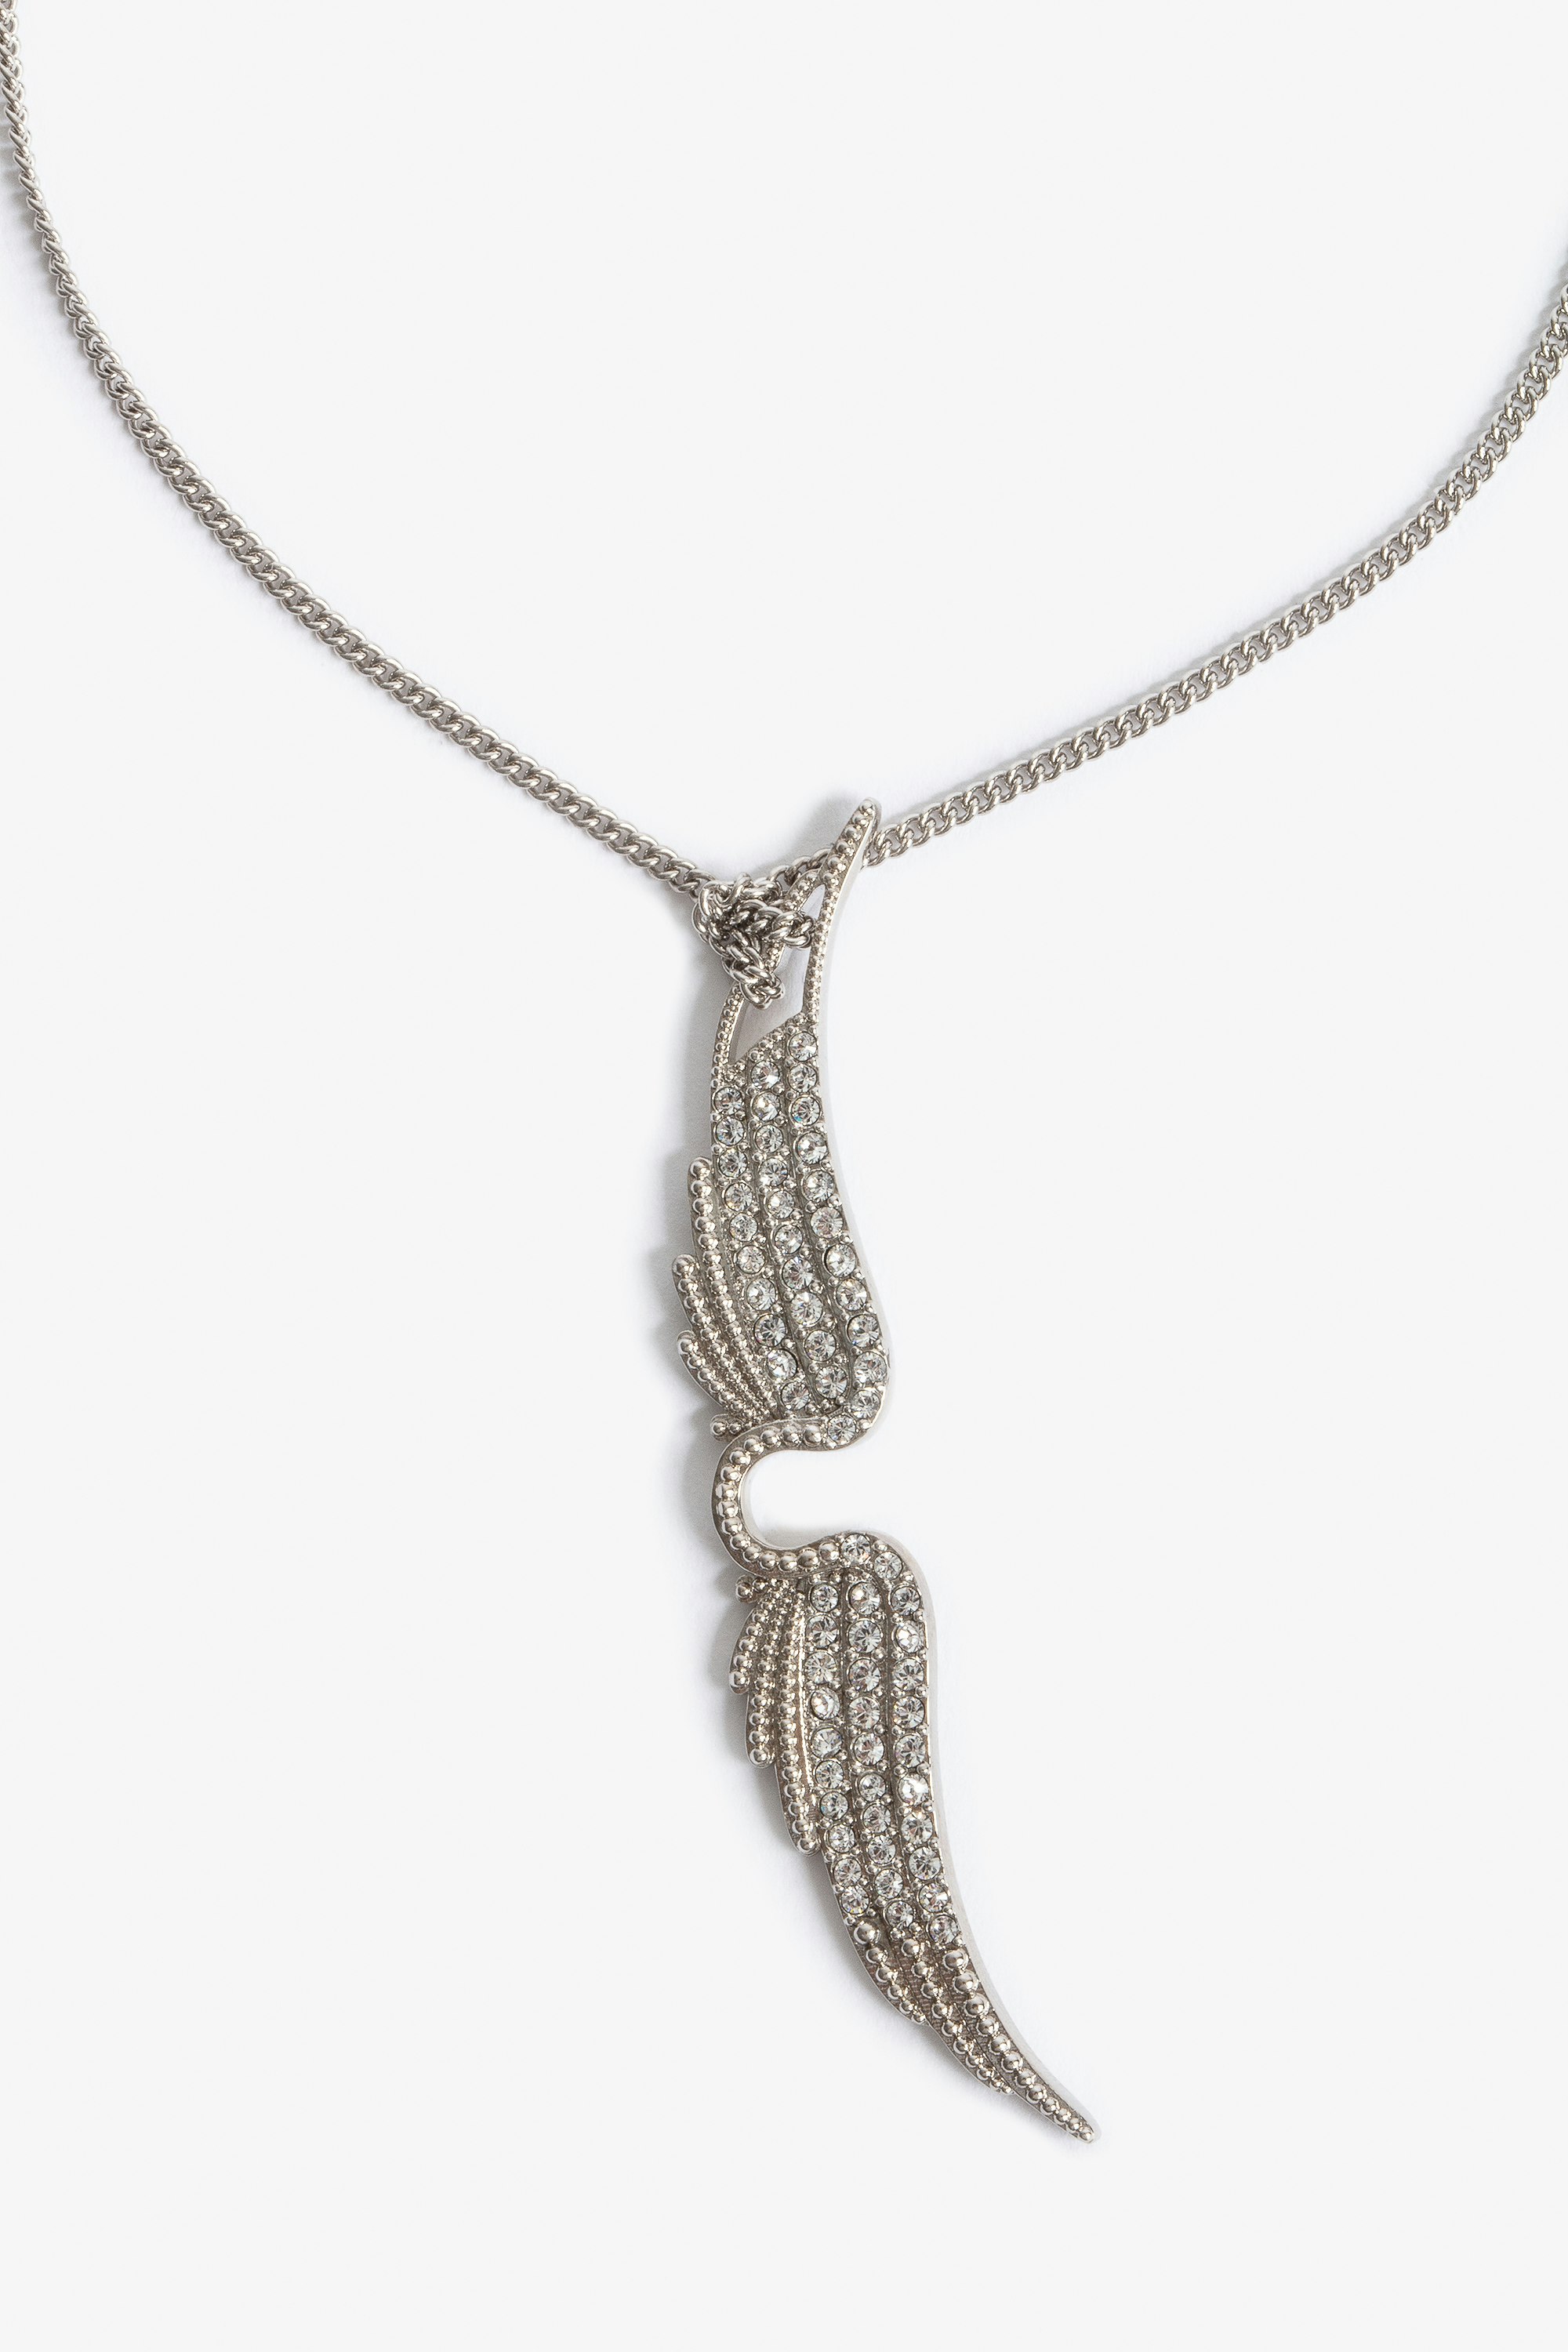 Rock Long ネックレス ラインストーンの翼、象徴的な銀メッキブラス製のロングネックレス レディース